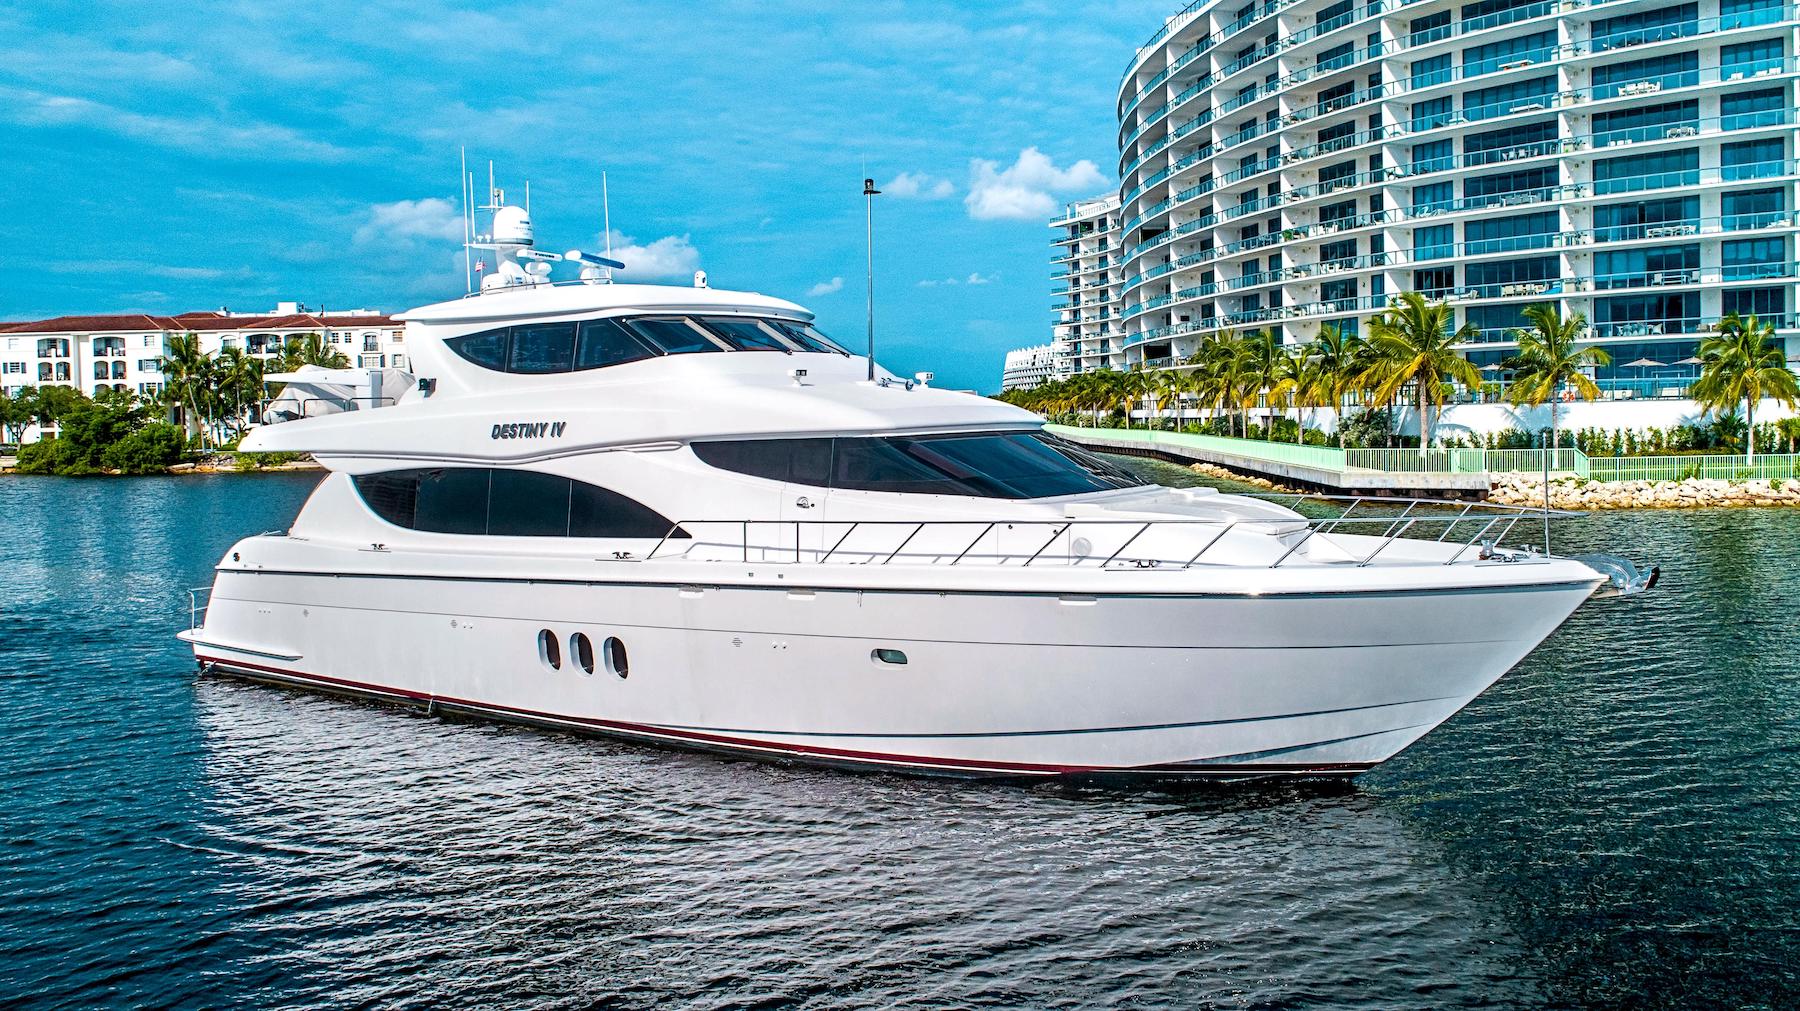 80′ Hatteras DESTINY IV Sold By Yacht Broker Tom Cardosa